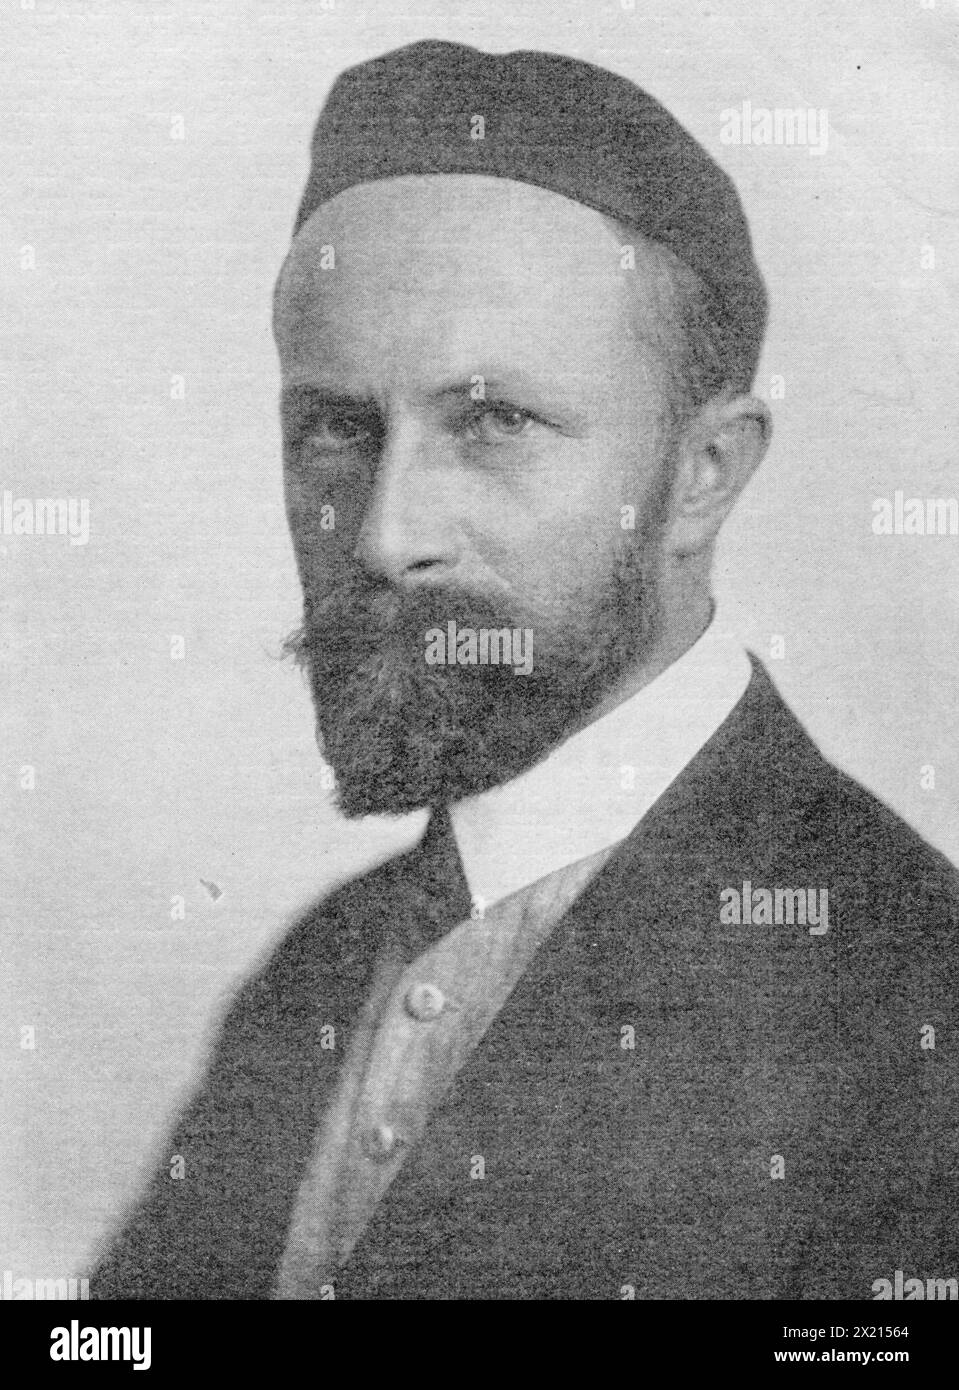 Strauss, Emil, 31.1.1866 - 10, 1960, scrittore tedesco, stampa basata sulla fotografia di C. Call, Zurich, ADDITIONAL-RIGHTS-CLEARANCE-INFO-NOT-AVAILABLE Foto Stock